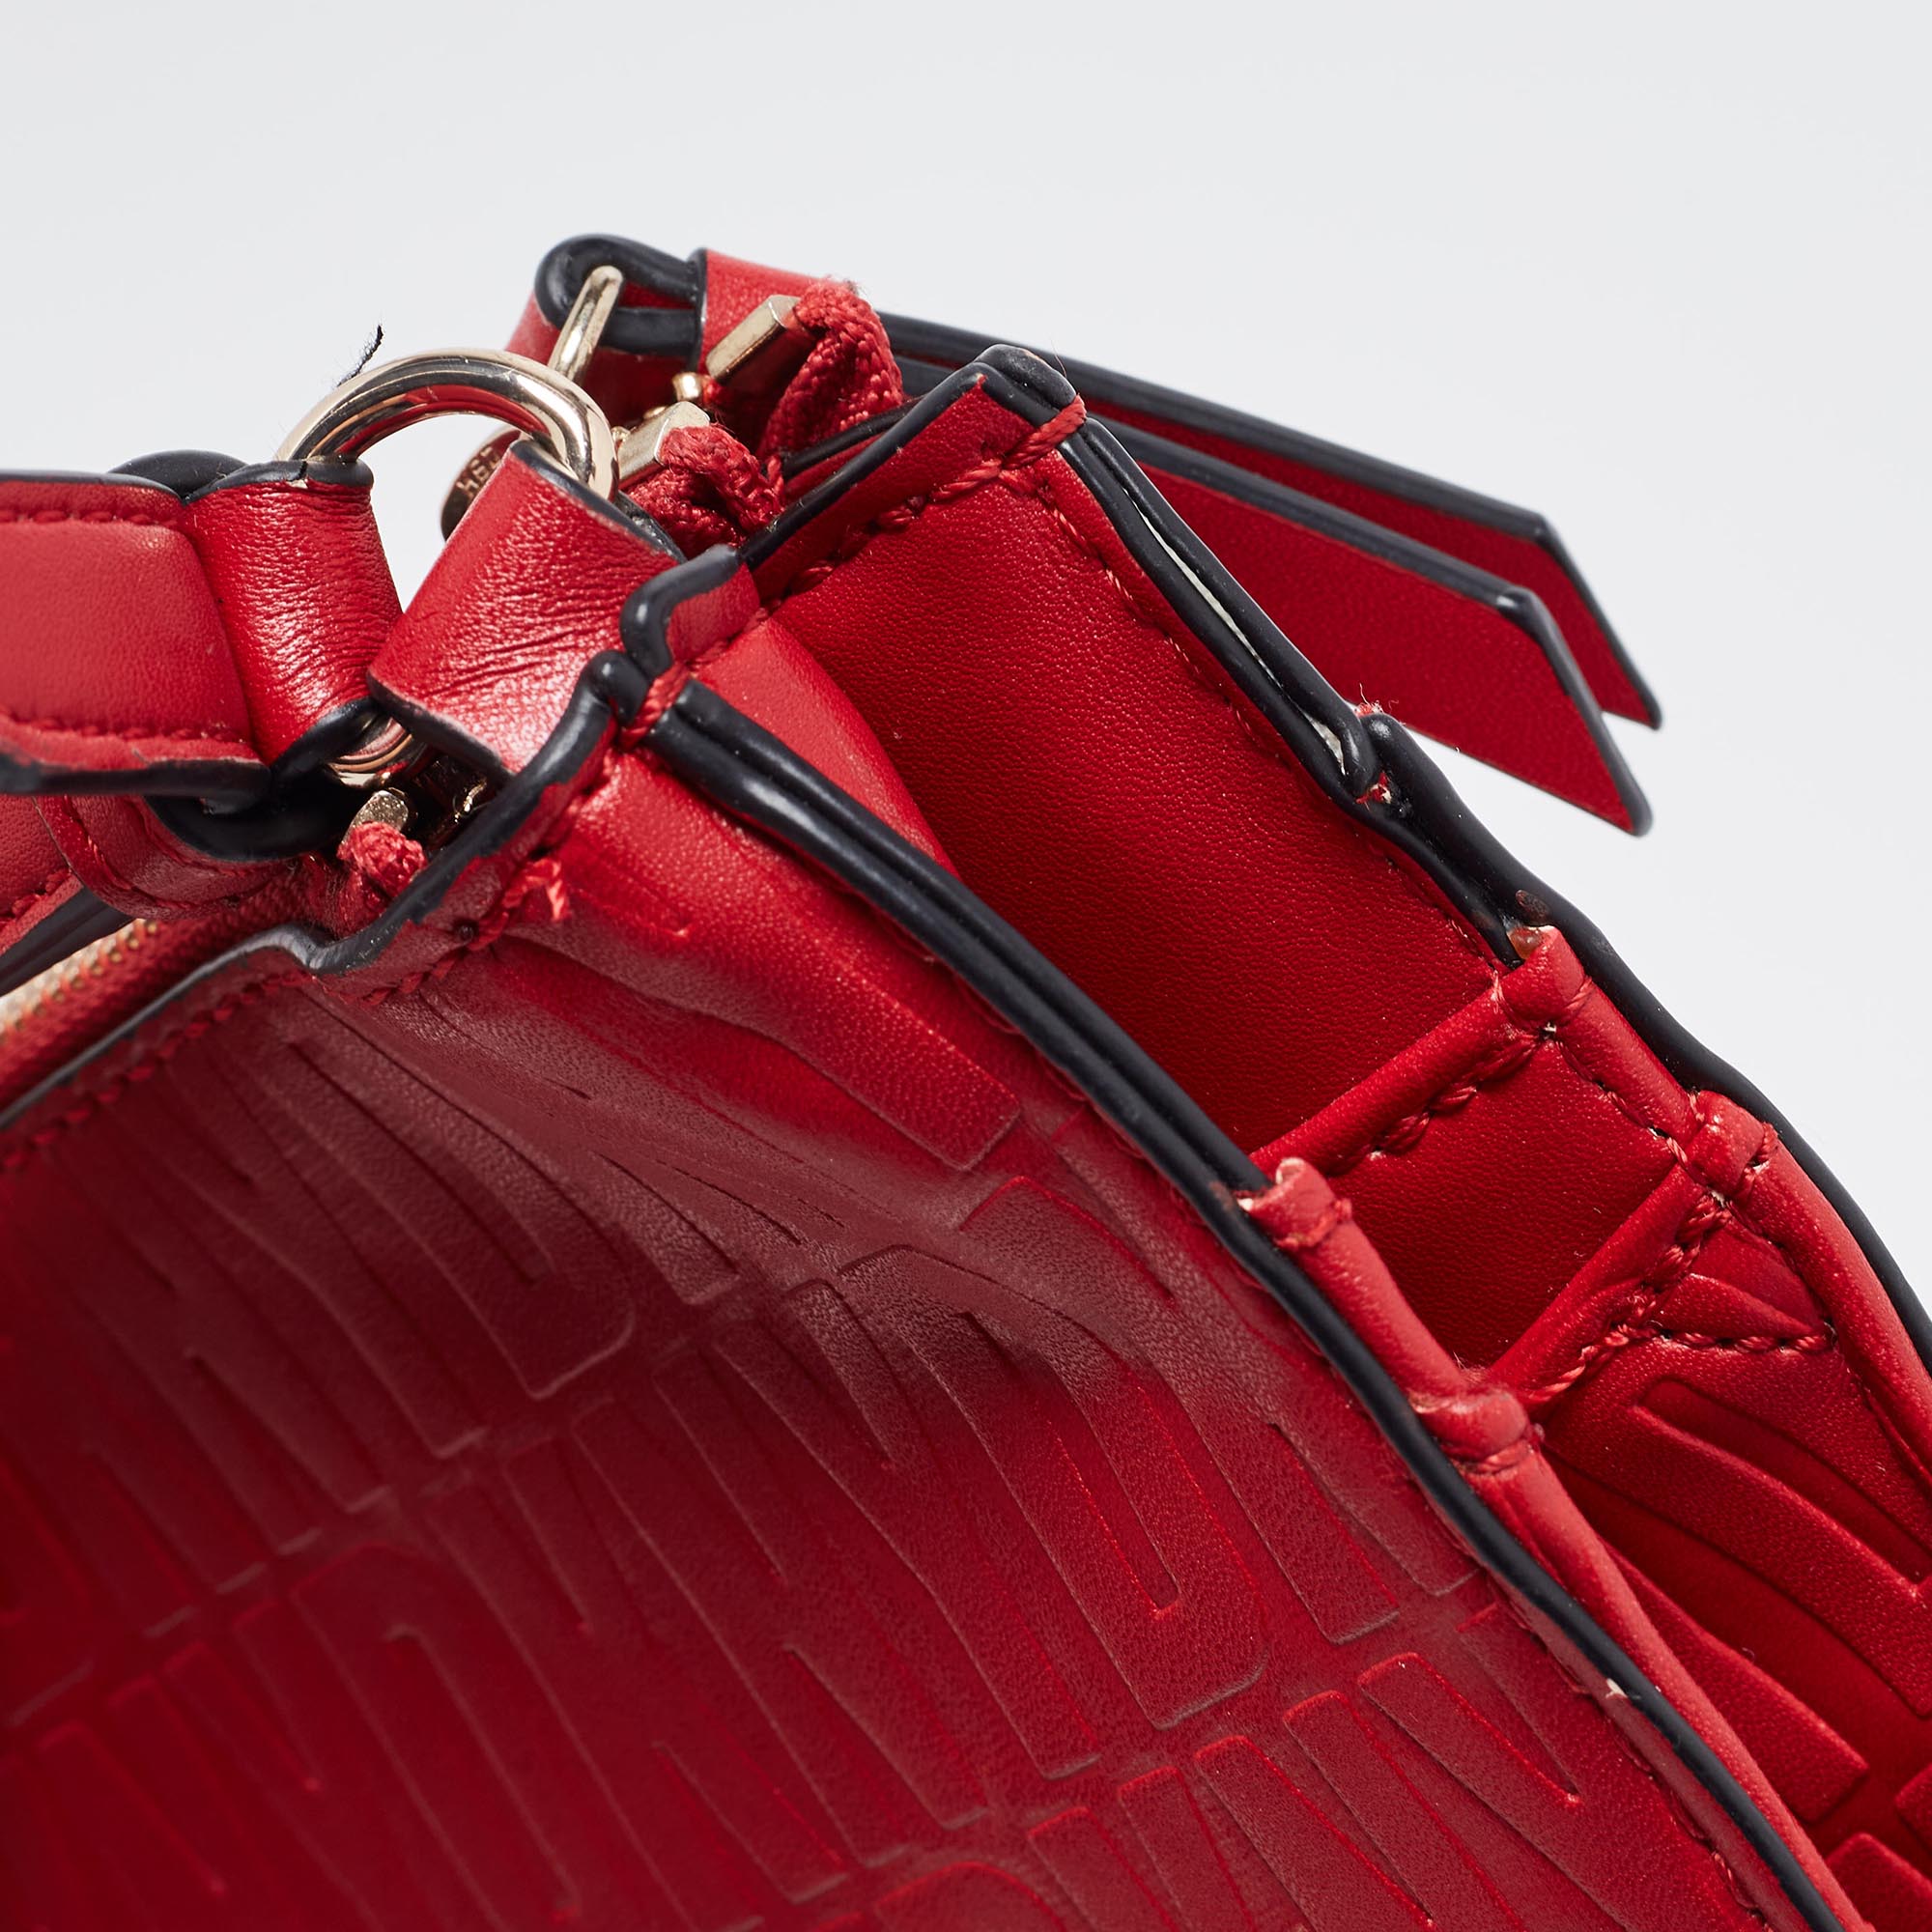 DKNY Red Logo Embossed Double Zip Crossbody Bag